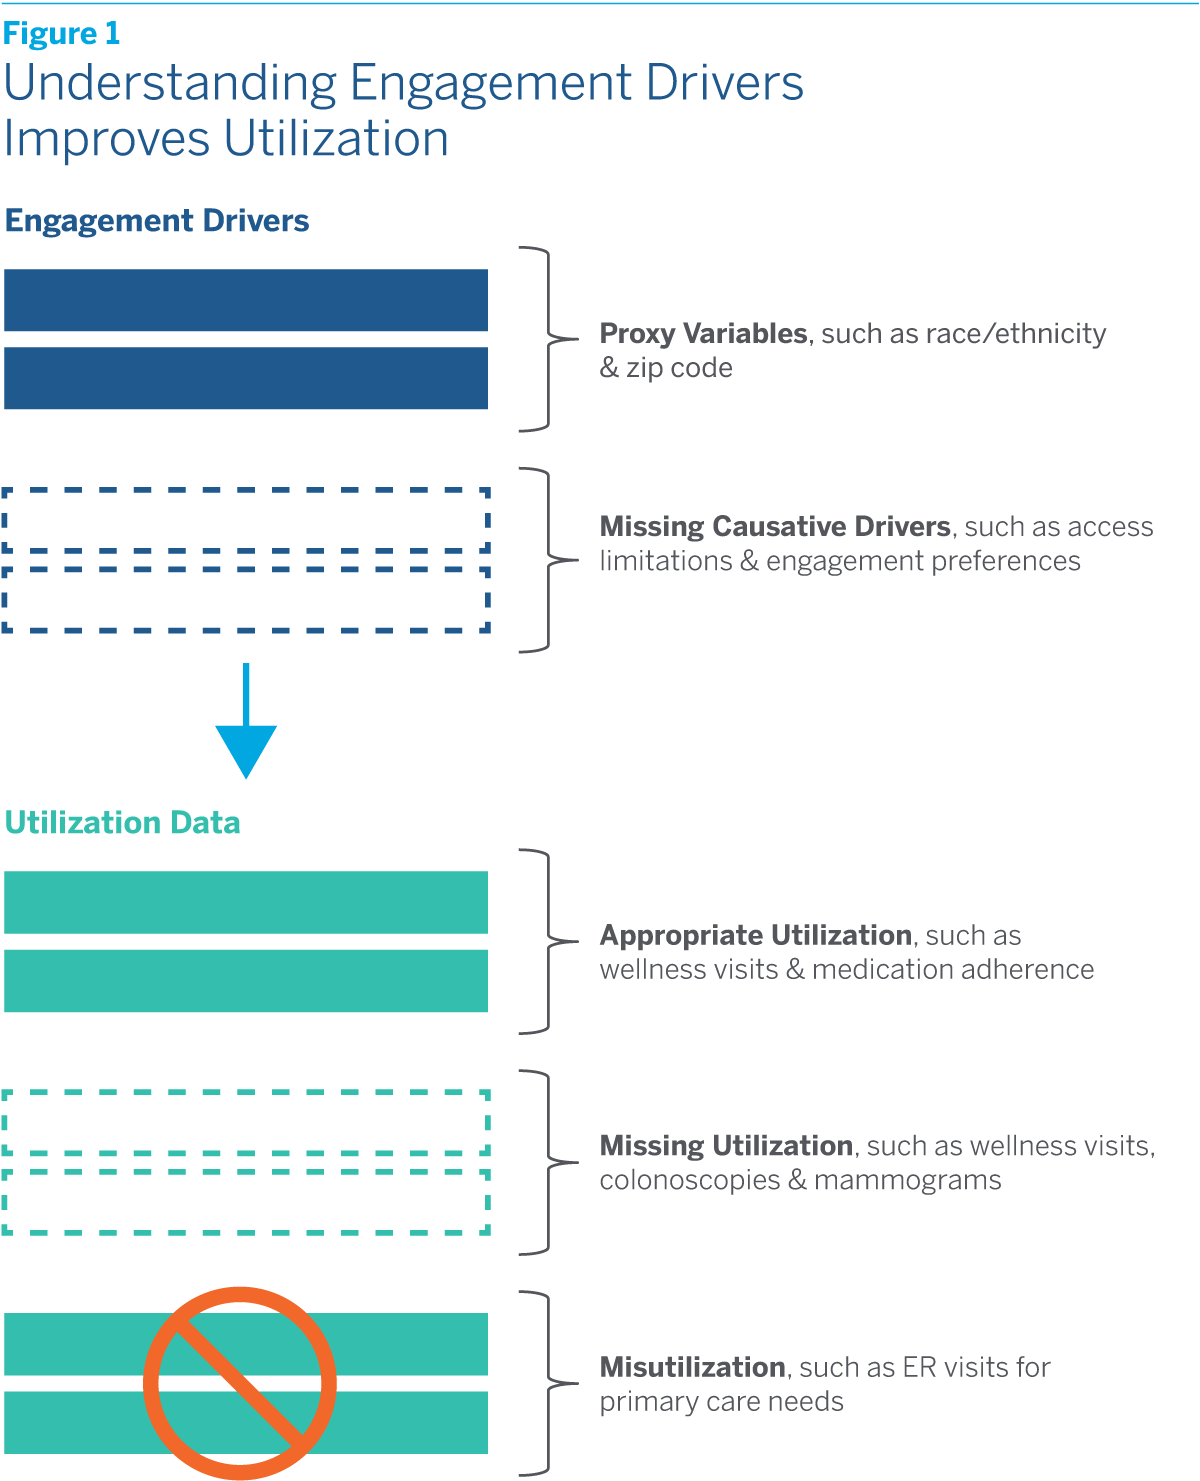 Figure 1: Understanding Engagement Drivers Improves Utilization